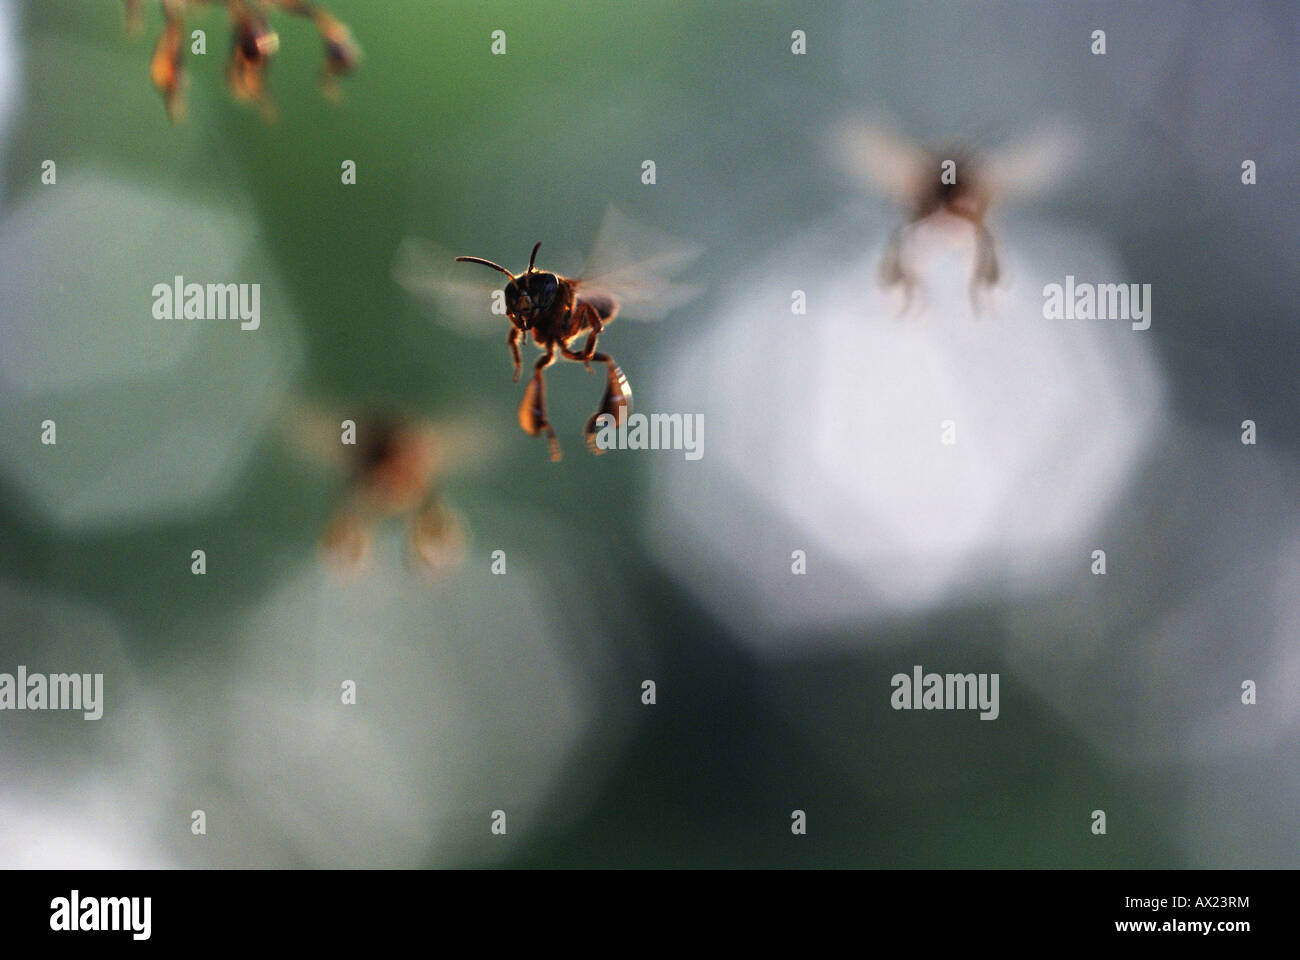 Flying bees, Amazon Basin, Brazil Stock Photo